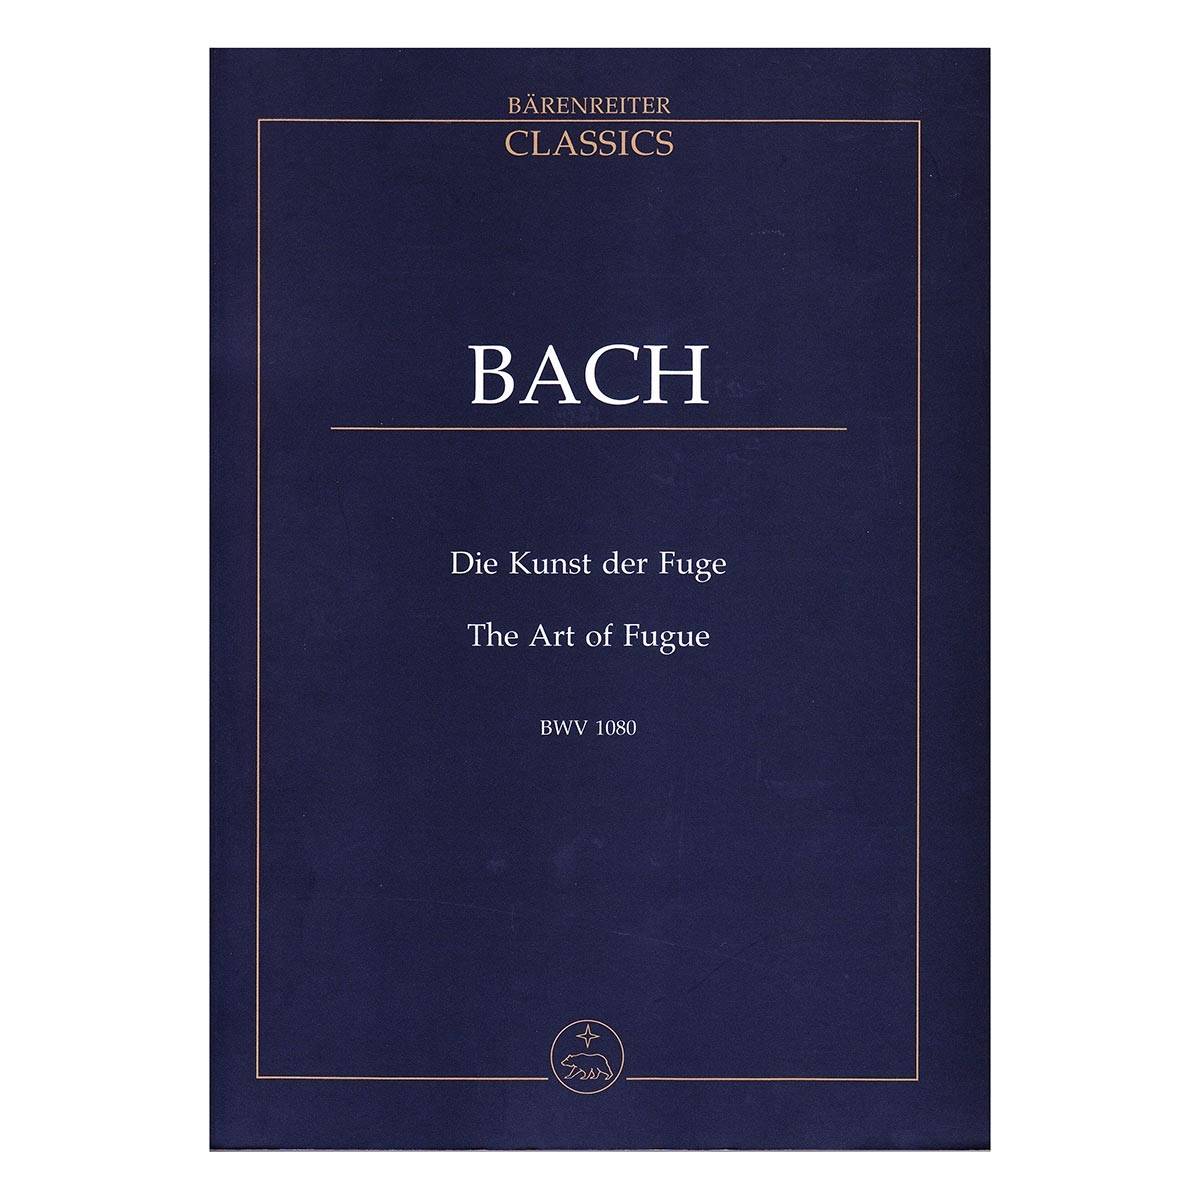 Bach - The Art of Fugue, BWV 1080 [Pocket Score]